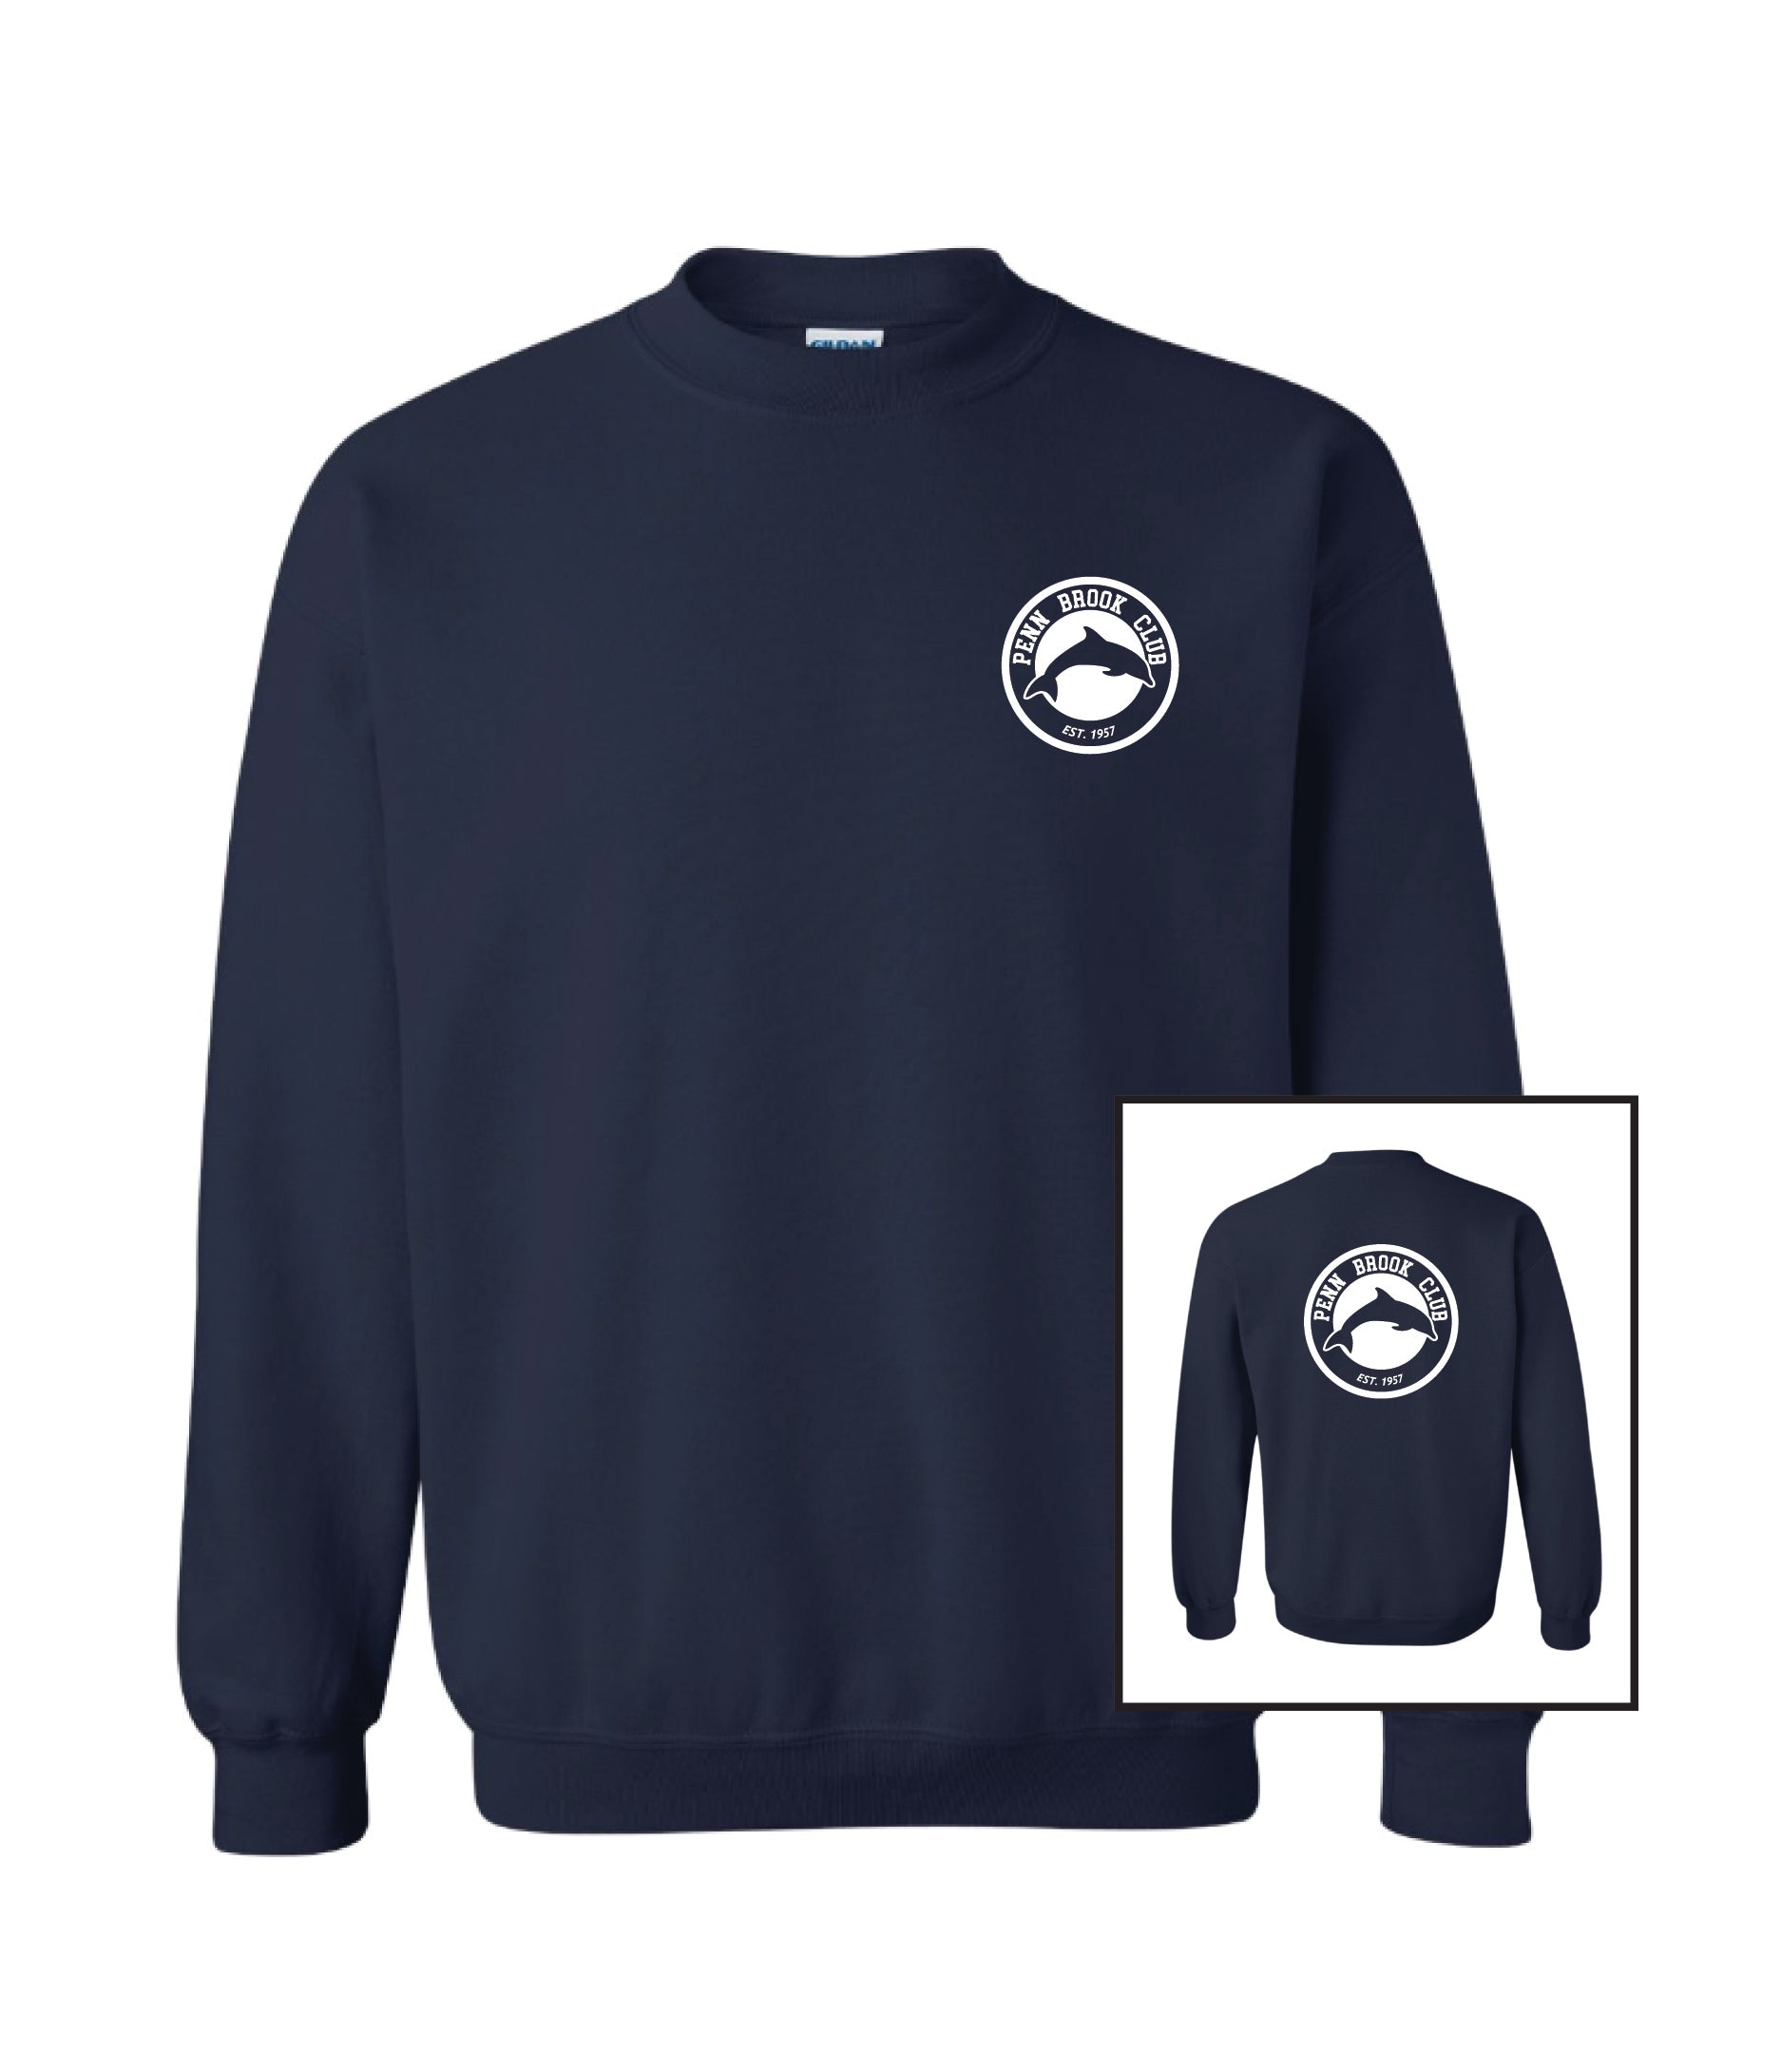 Penn Brook Navy Crewneck Sweatshirt - Adult Unisex and Youth